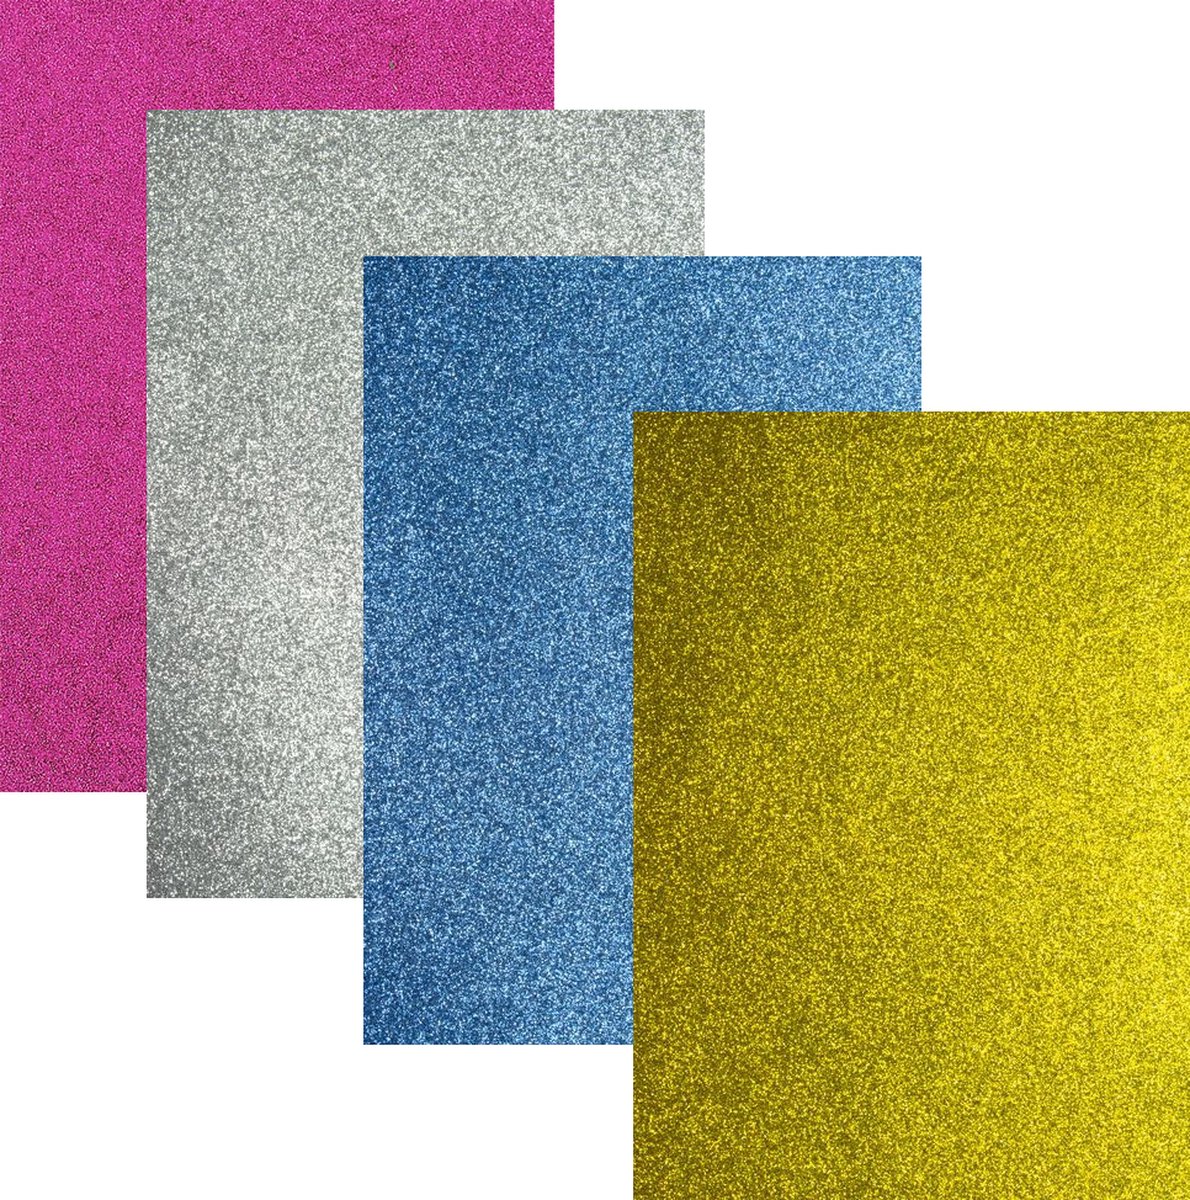 Knutselkarton glitter A4 formaat 48 stuks - Glitterpapier - Bling-bling karton - Schitterkarton - Decoratiekarton - Knutselkarton met glitter